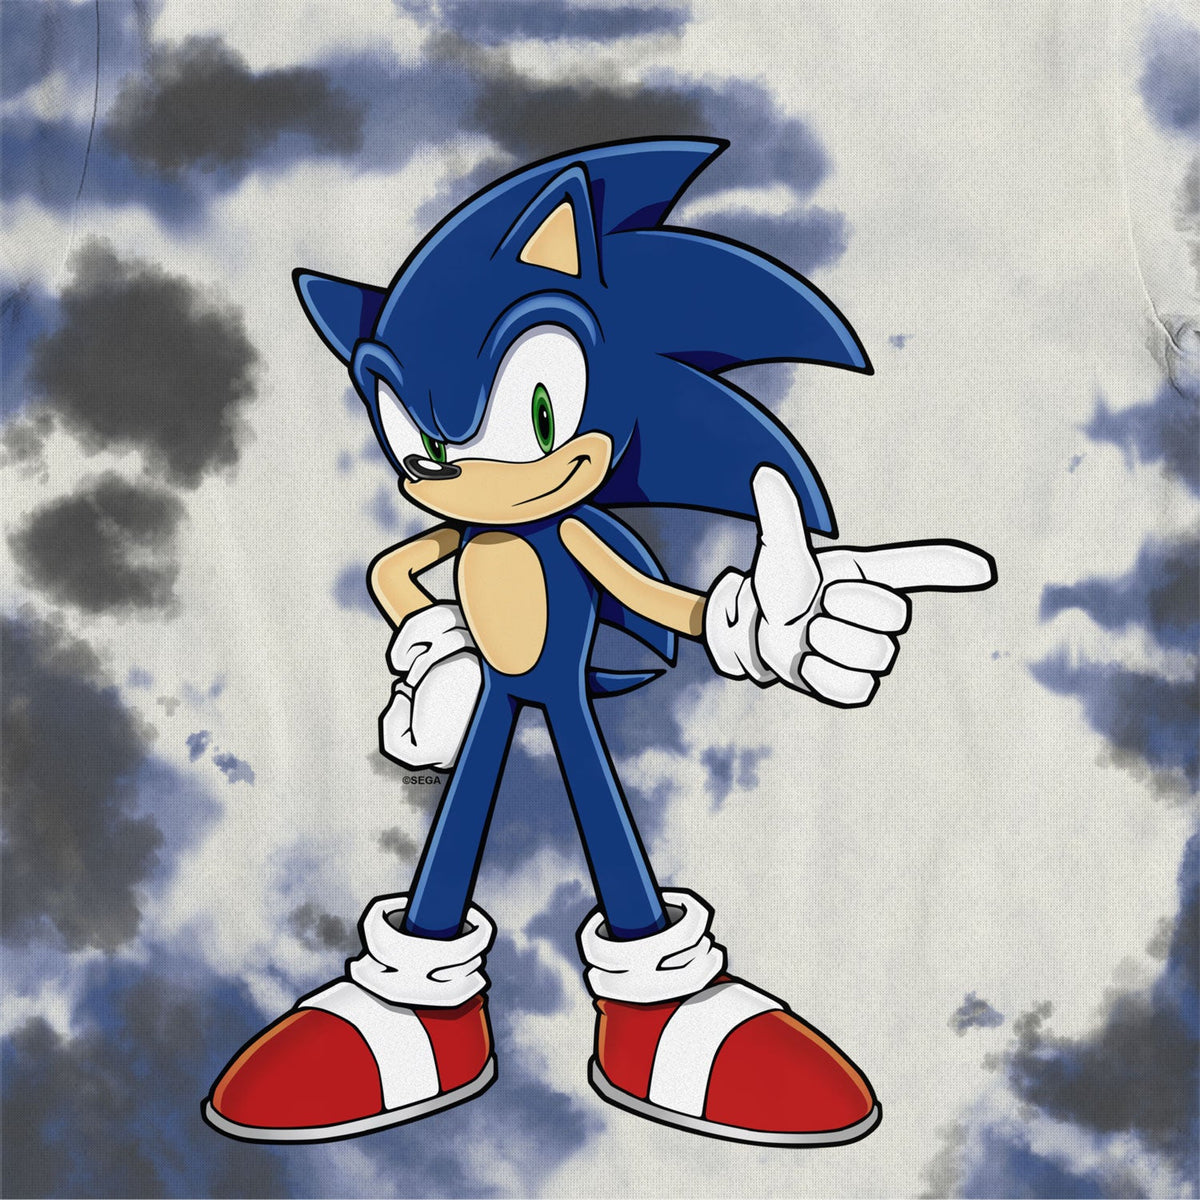 Sonic The Hedgehog Tie Dye Grey, Blue & White Kids T-Shirt